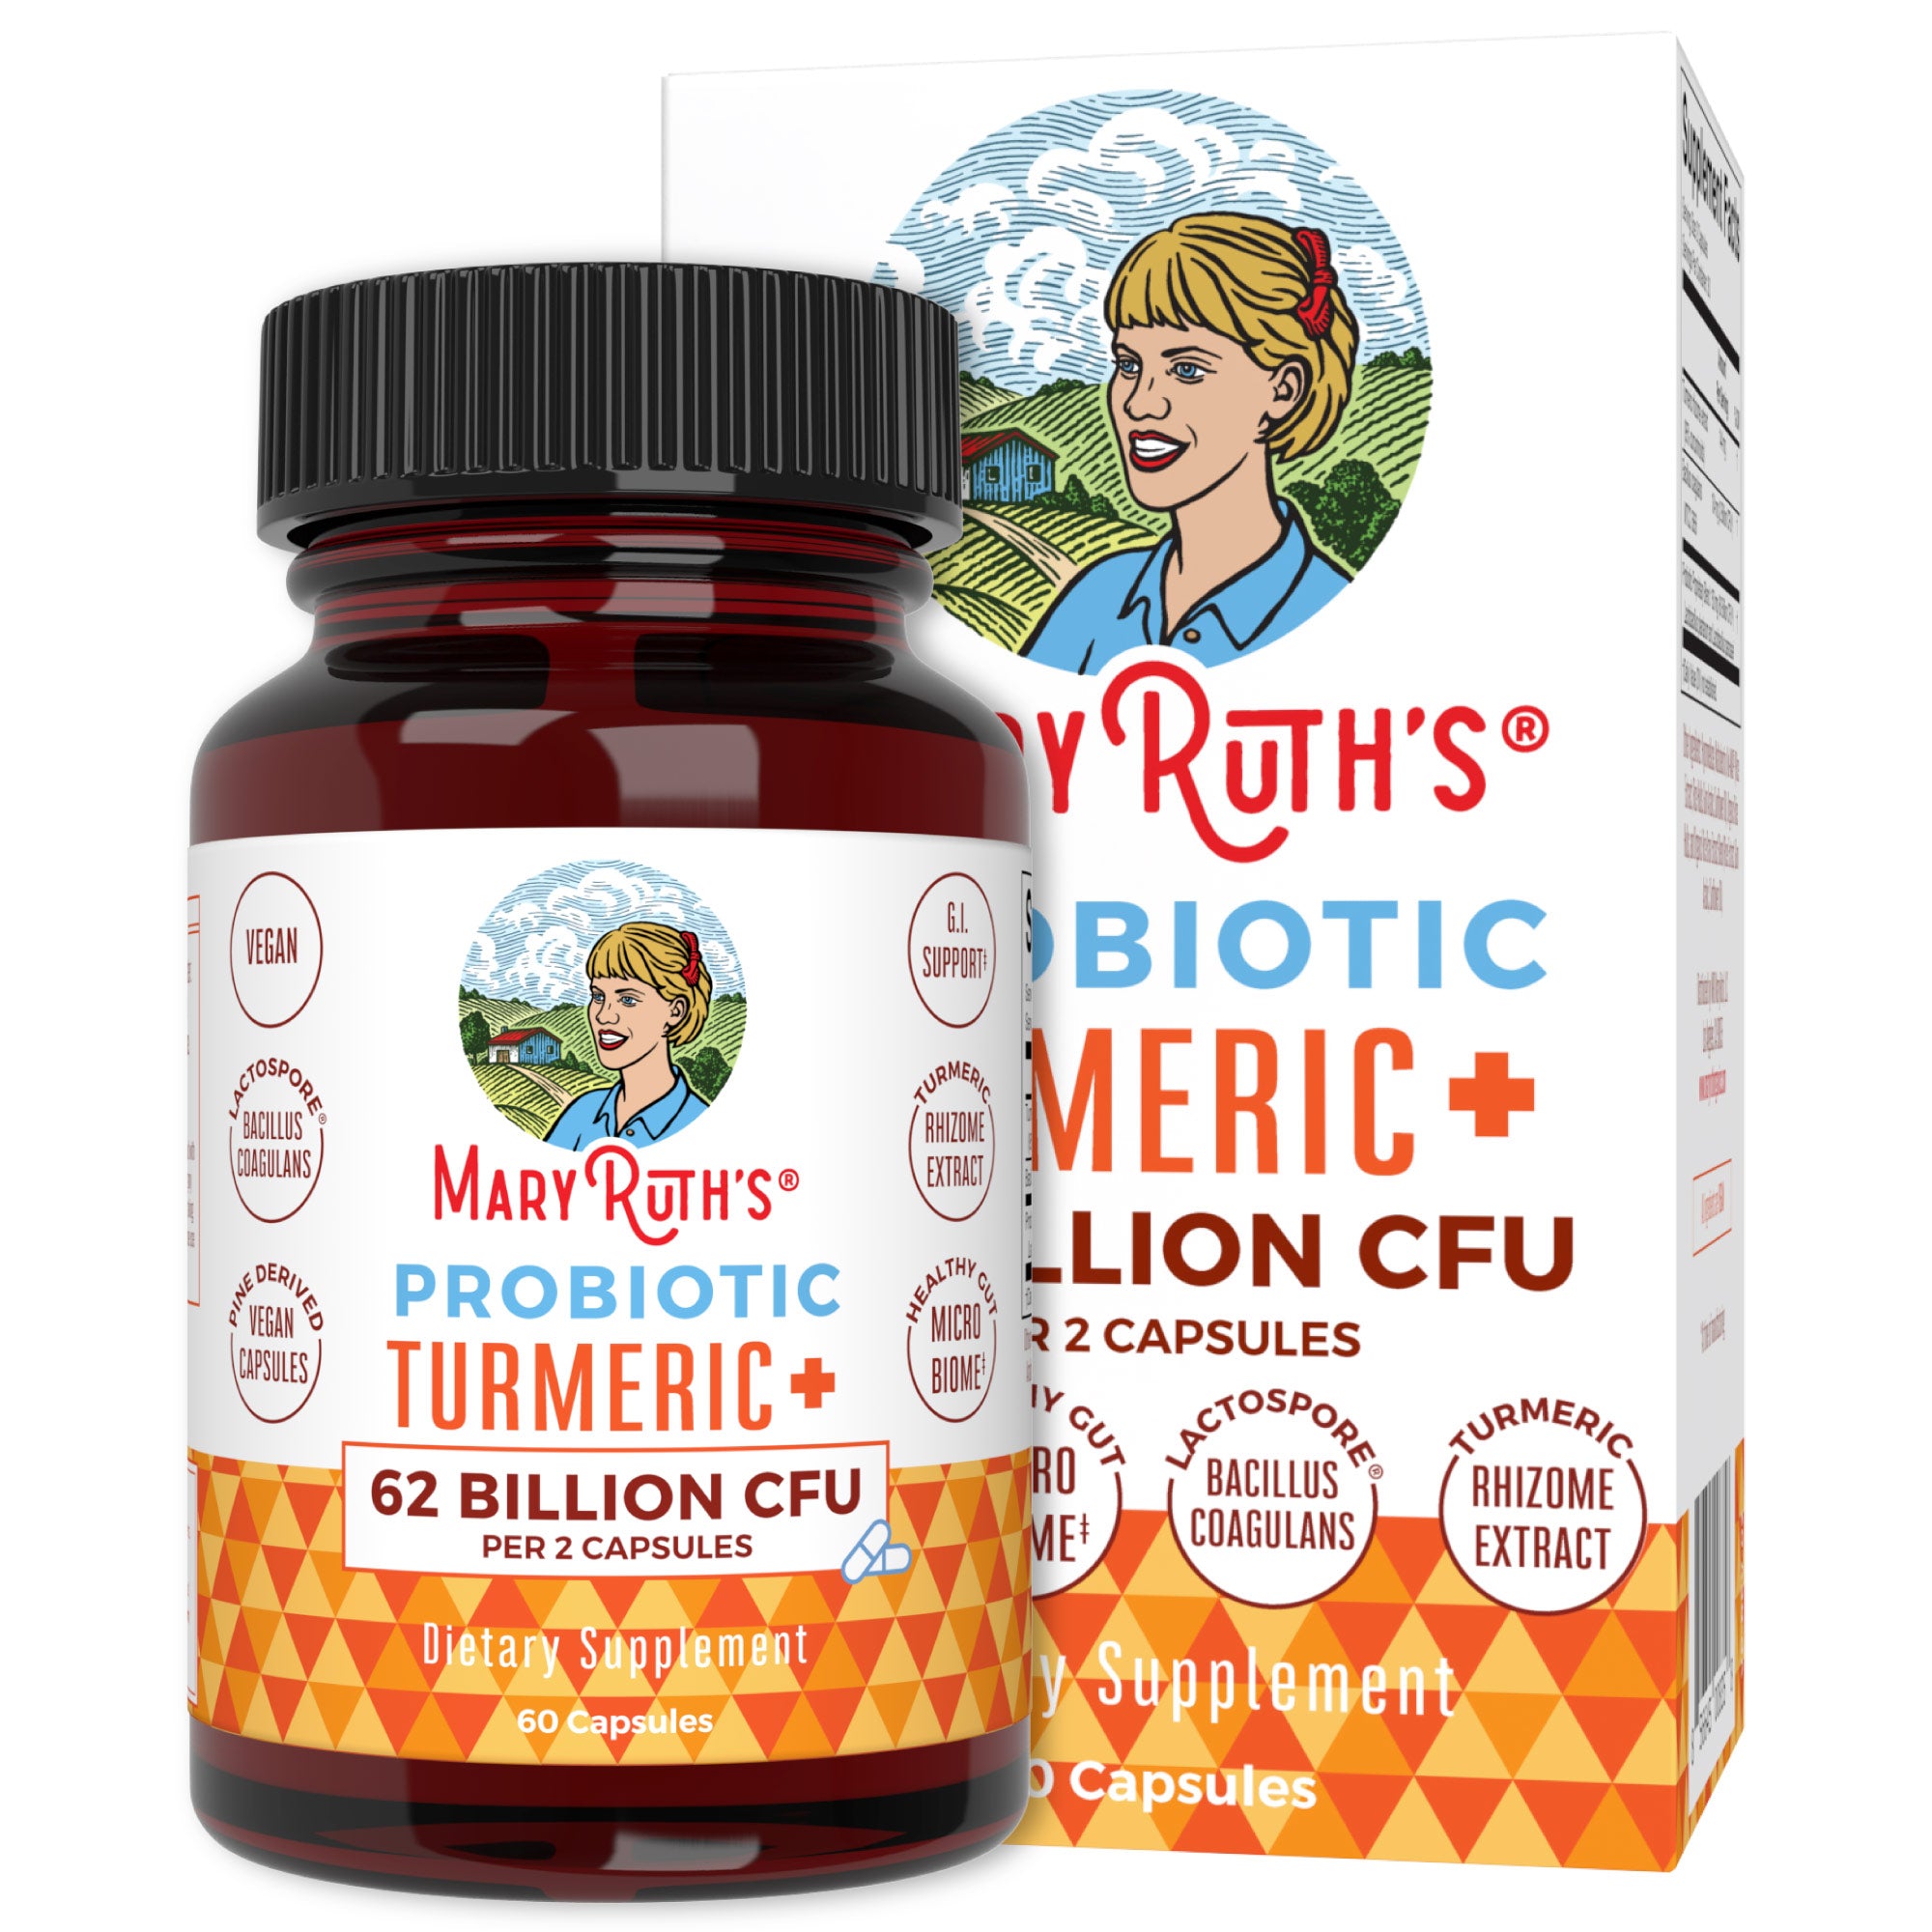 MaryRuth Turmeric Probiotics For Gut Health Capsules Product Image Bottle + Box